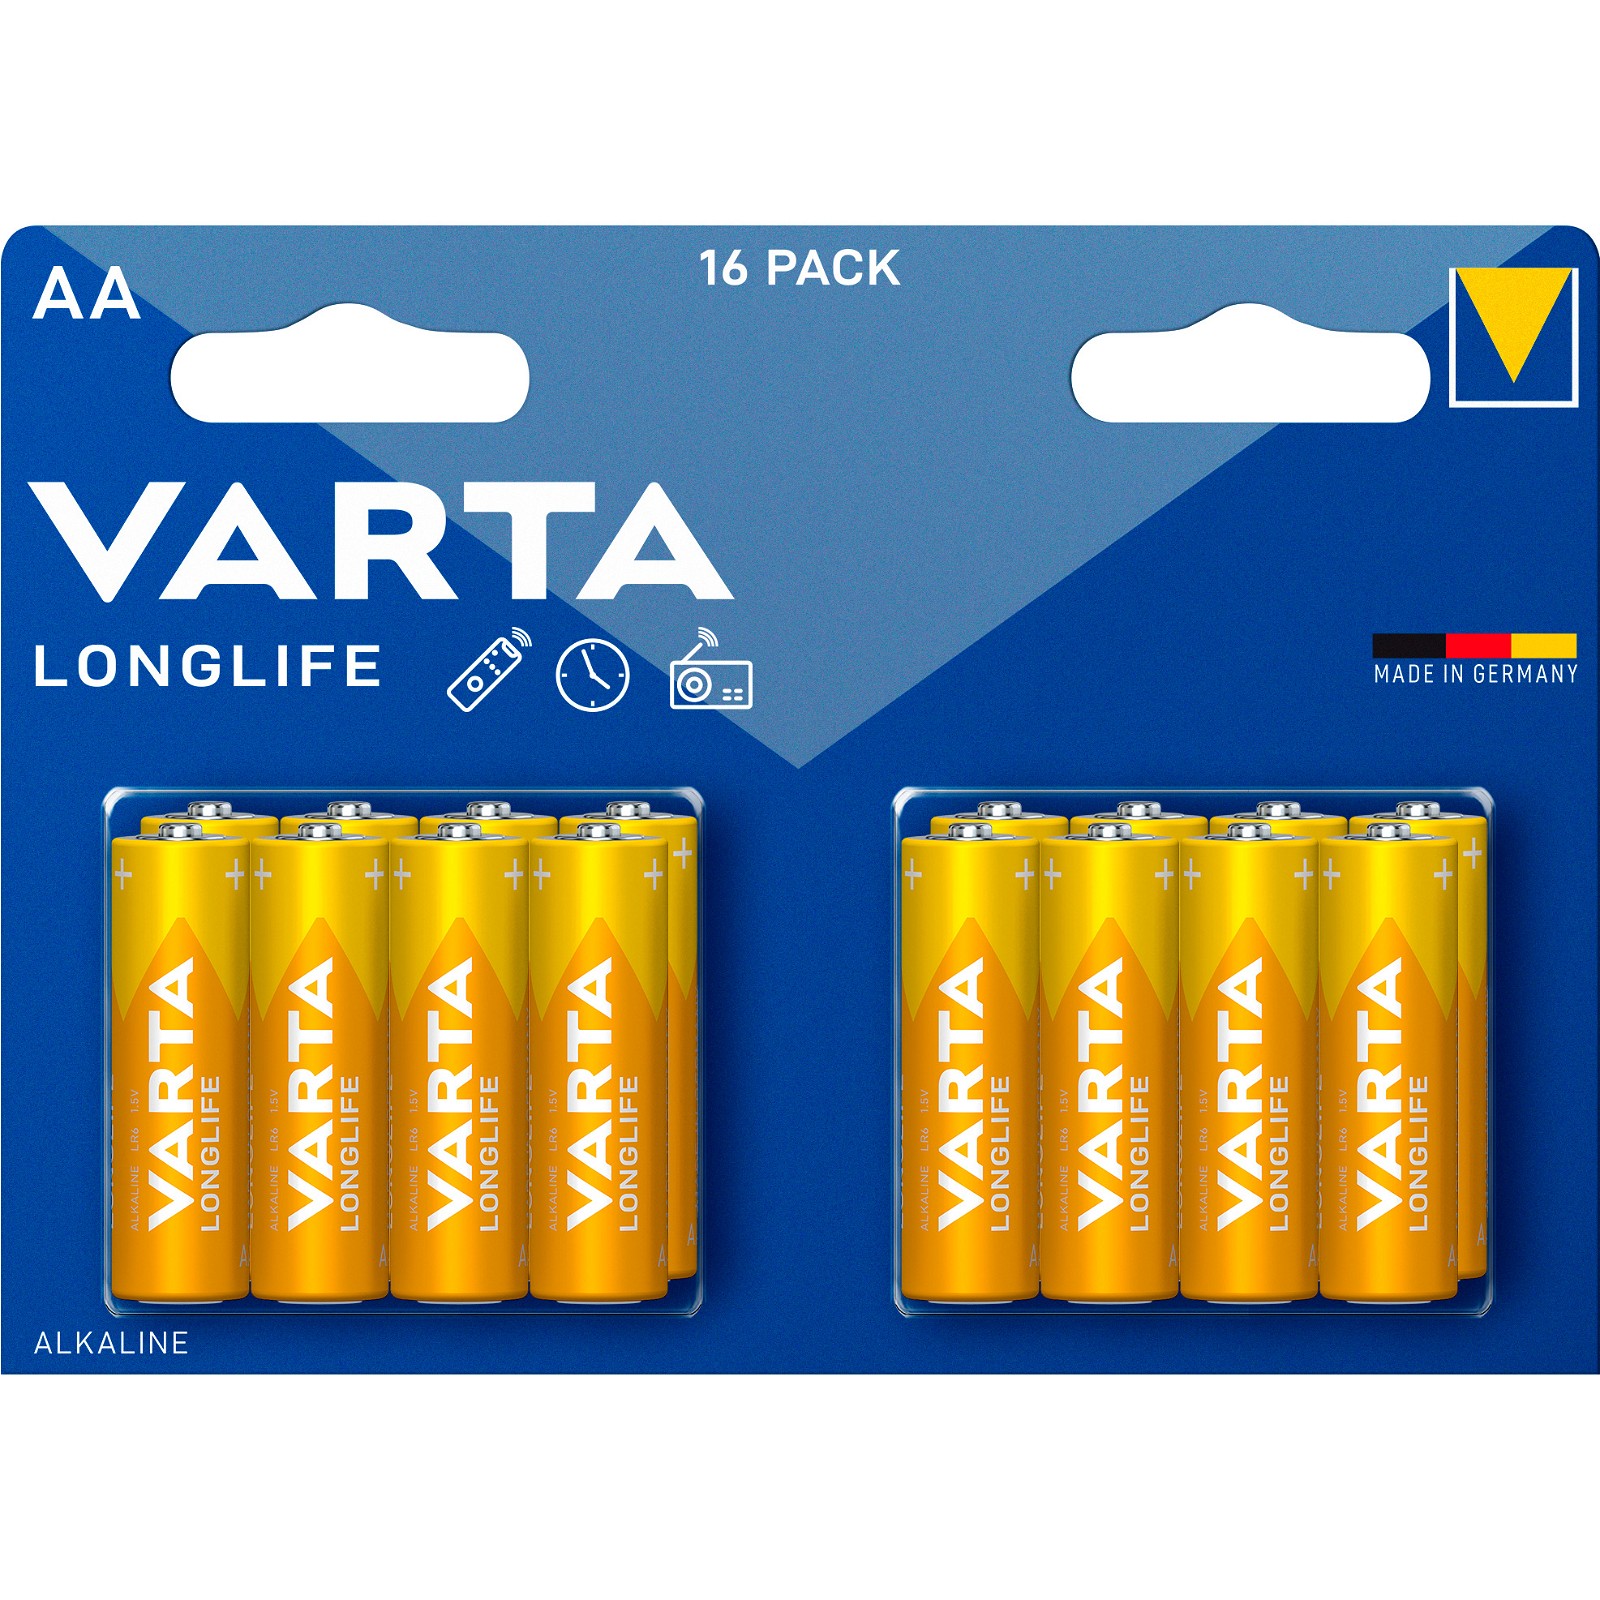 Sikker Wedge skade Batteri VARTA Longlife AAA LR03 Blisterpak 16 stk. - Daarbak Redoffice A/S